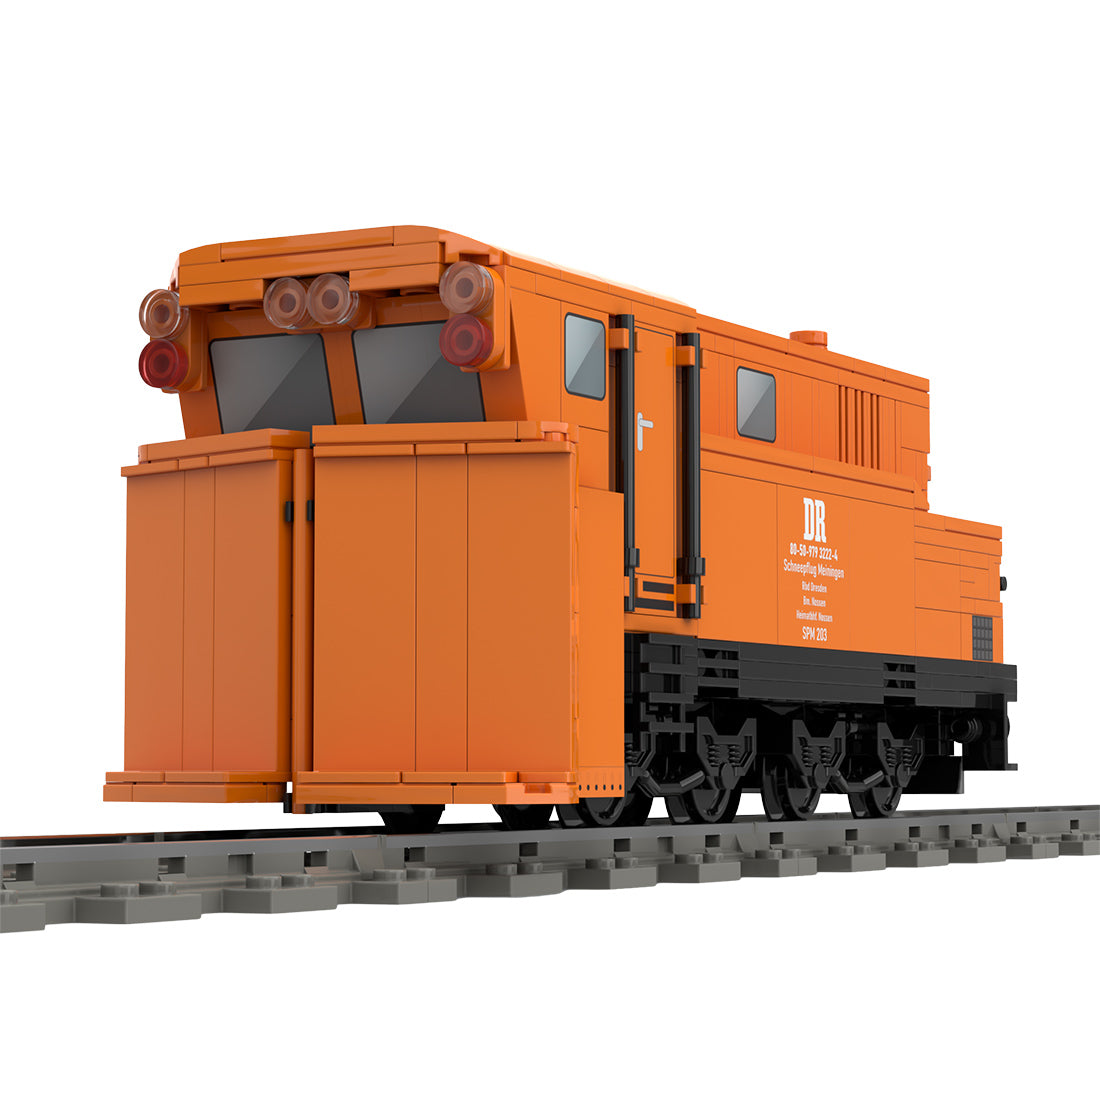 Meiningen Type Snowplough Train